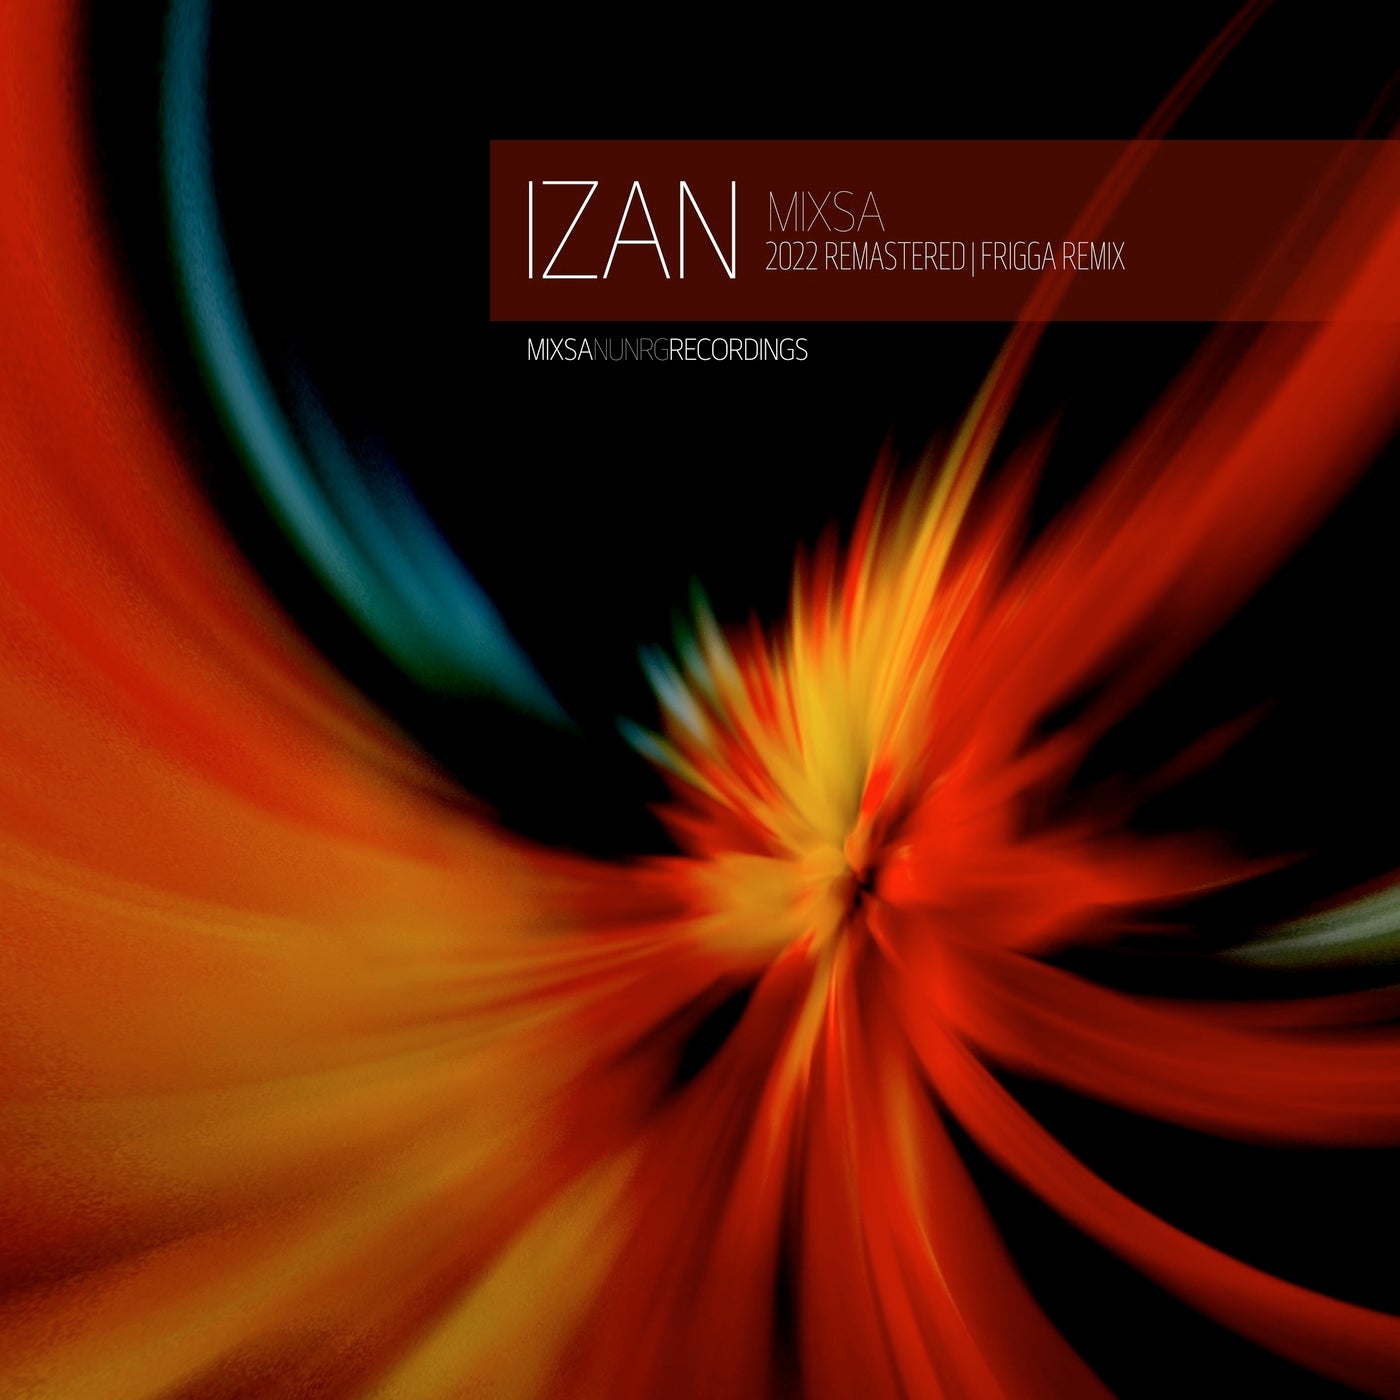 Izan (2022 Remastered/ Frigga Remix)